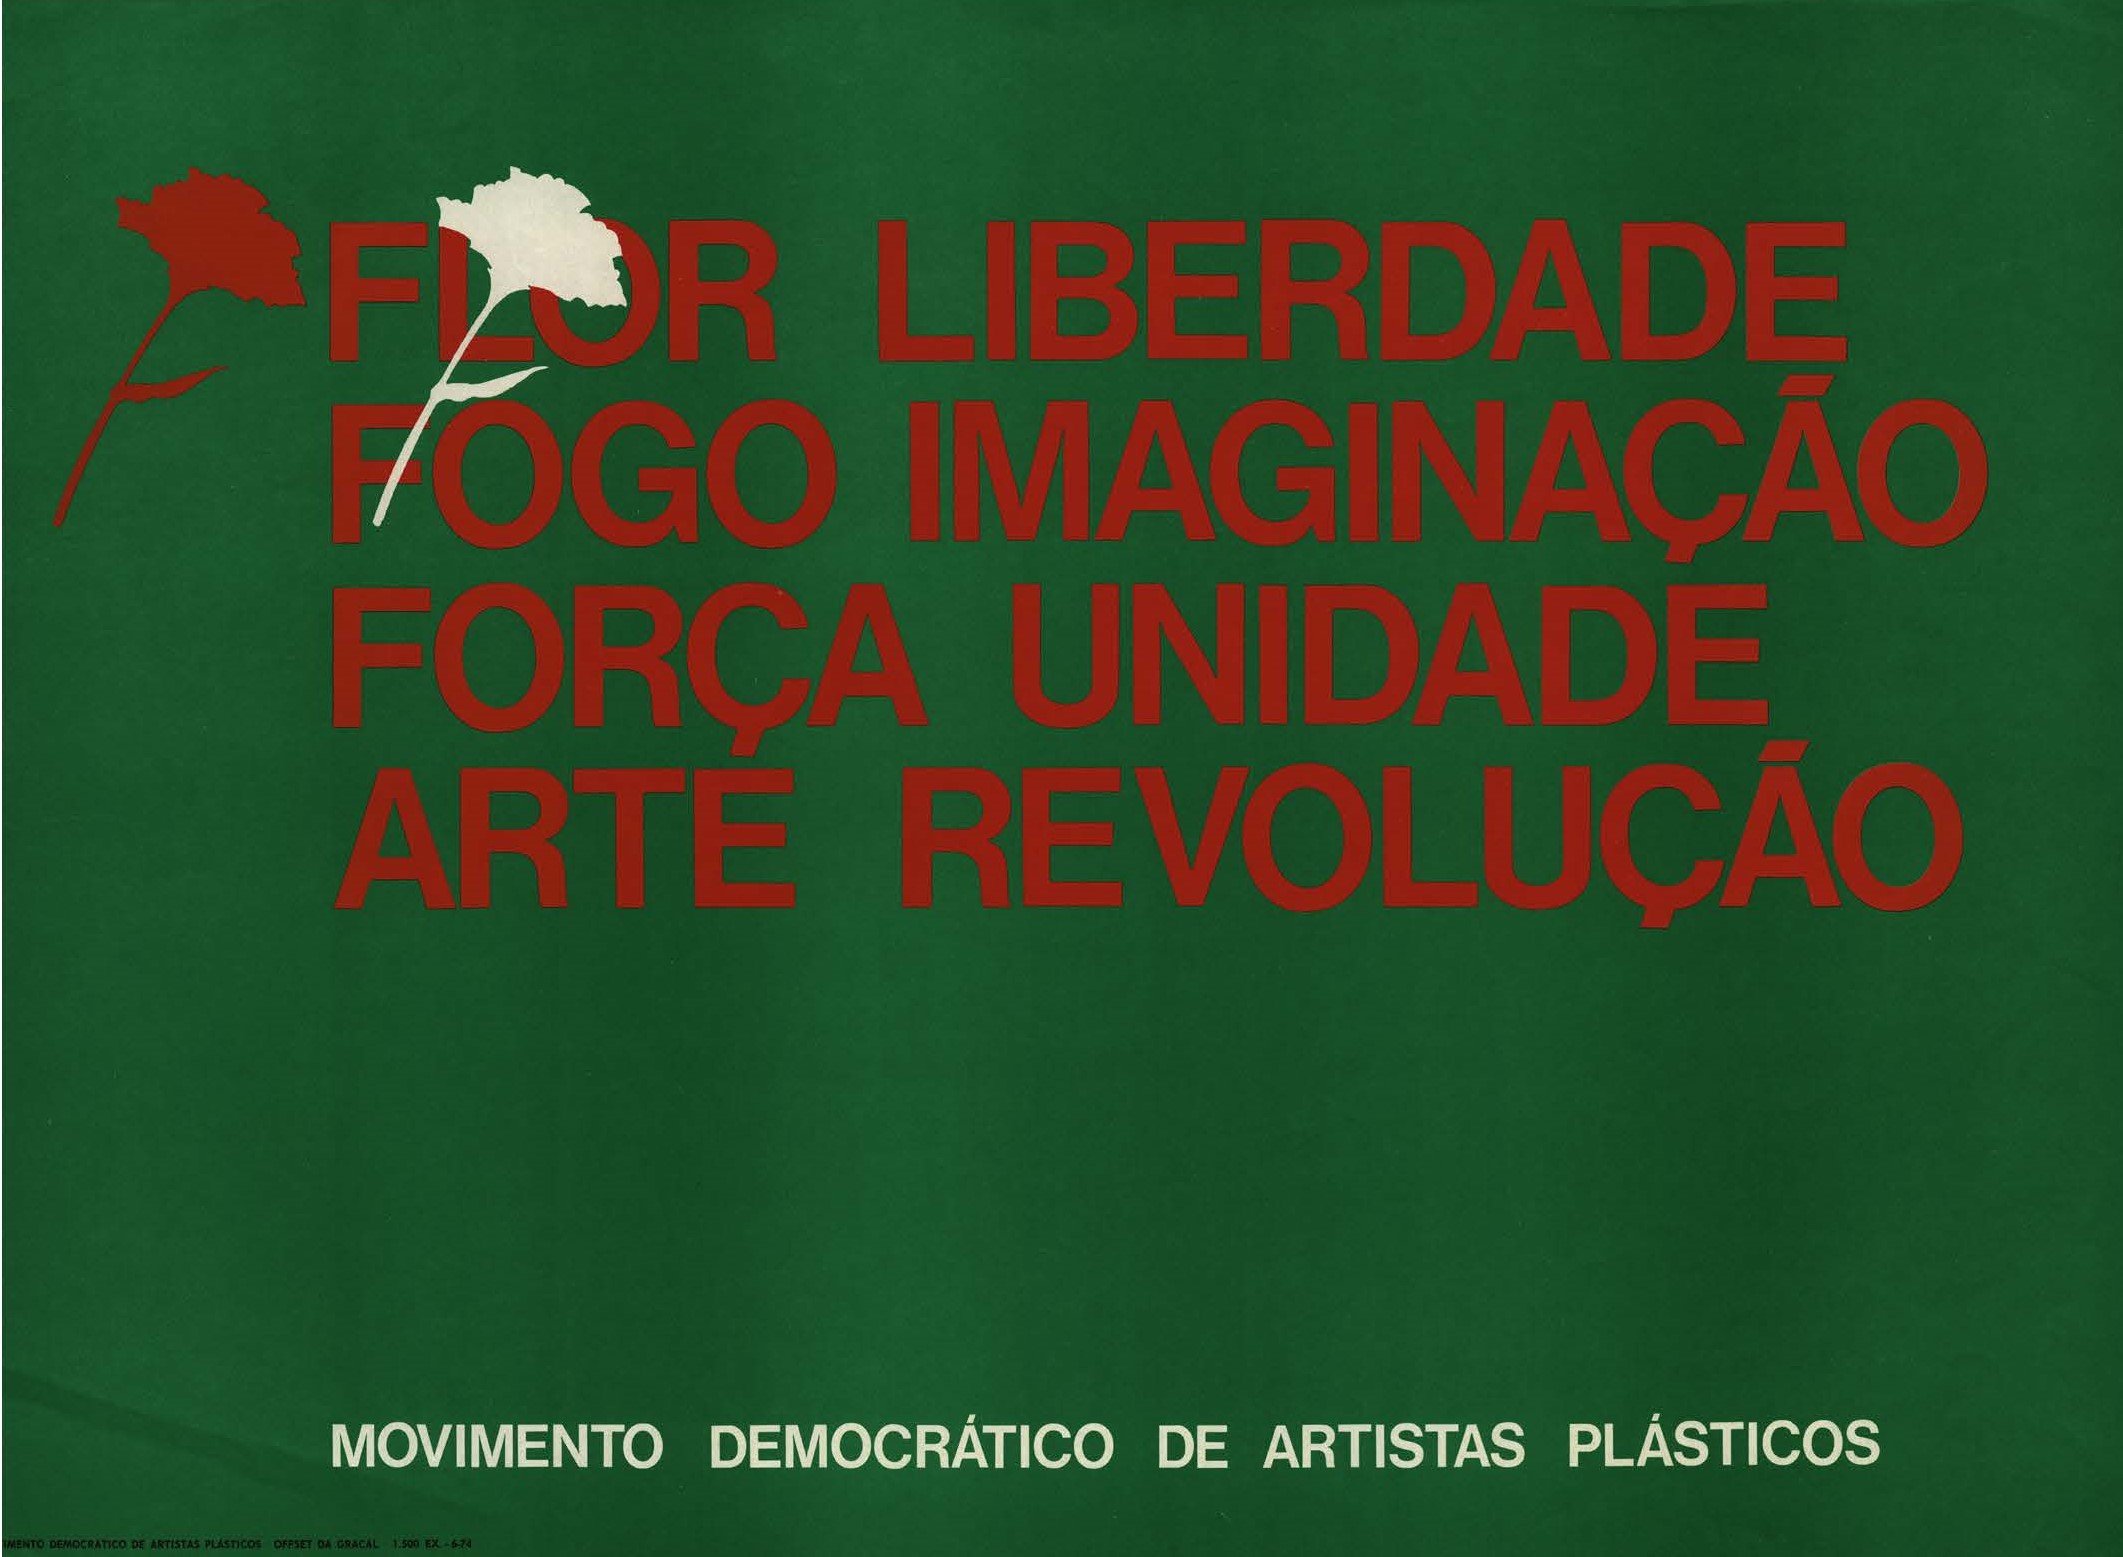 Figure 6. MDAP poster, 49 x 70 cm. Source: BNP - Biblioteca Nacional de Portugal: https://purl.pt/7558